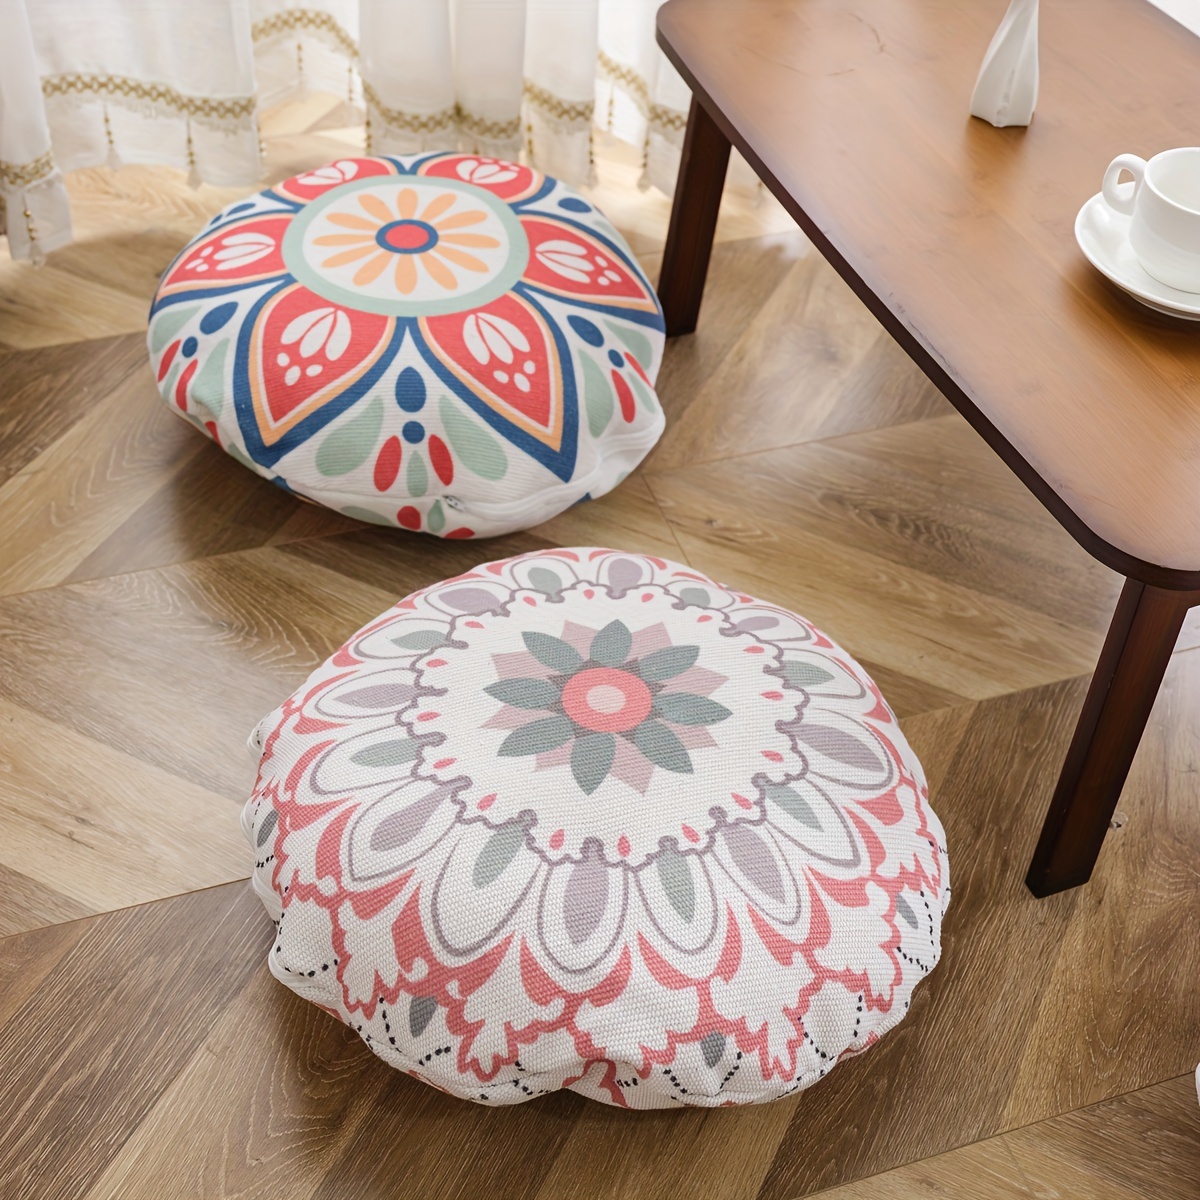 Boho Round Floor Seat Pillows Cushions 22 x 22, Soft Cotton Linen  Bohemian Yoga Mandala Meditation Pouf Tatami Floor Pillow Cushion for  Living Room